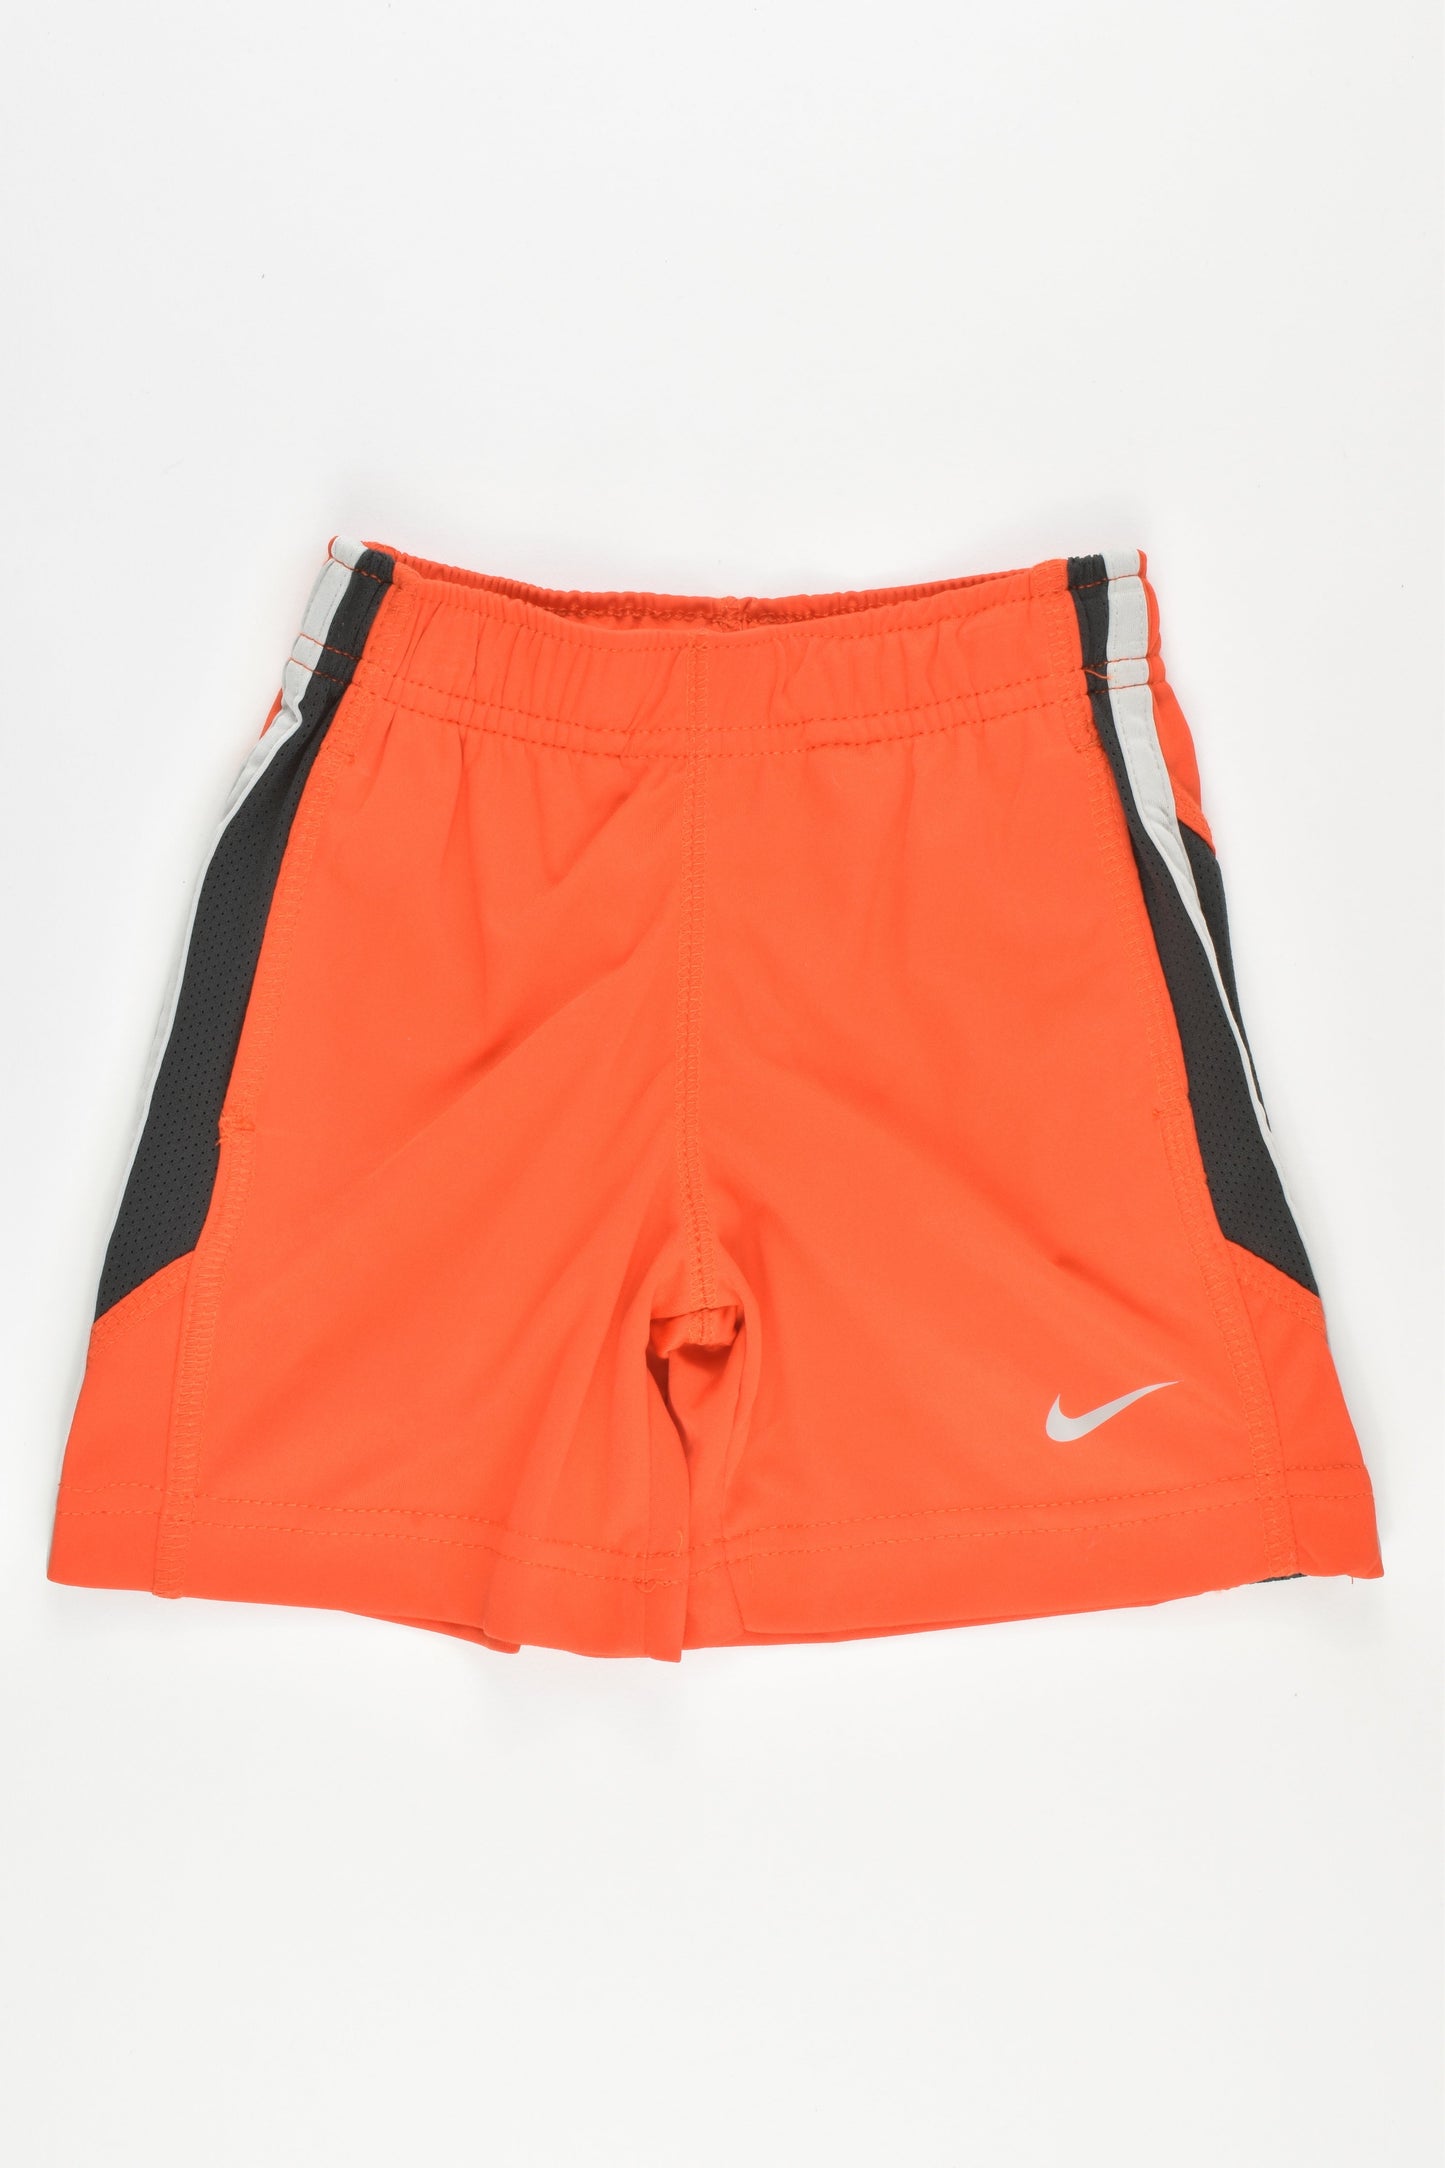 Nike Size 2 Dri-Fit Shorts